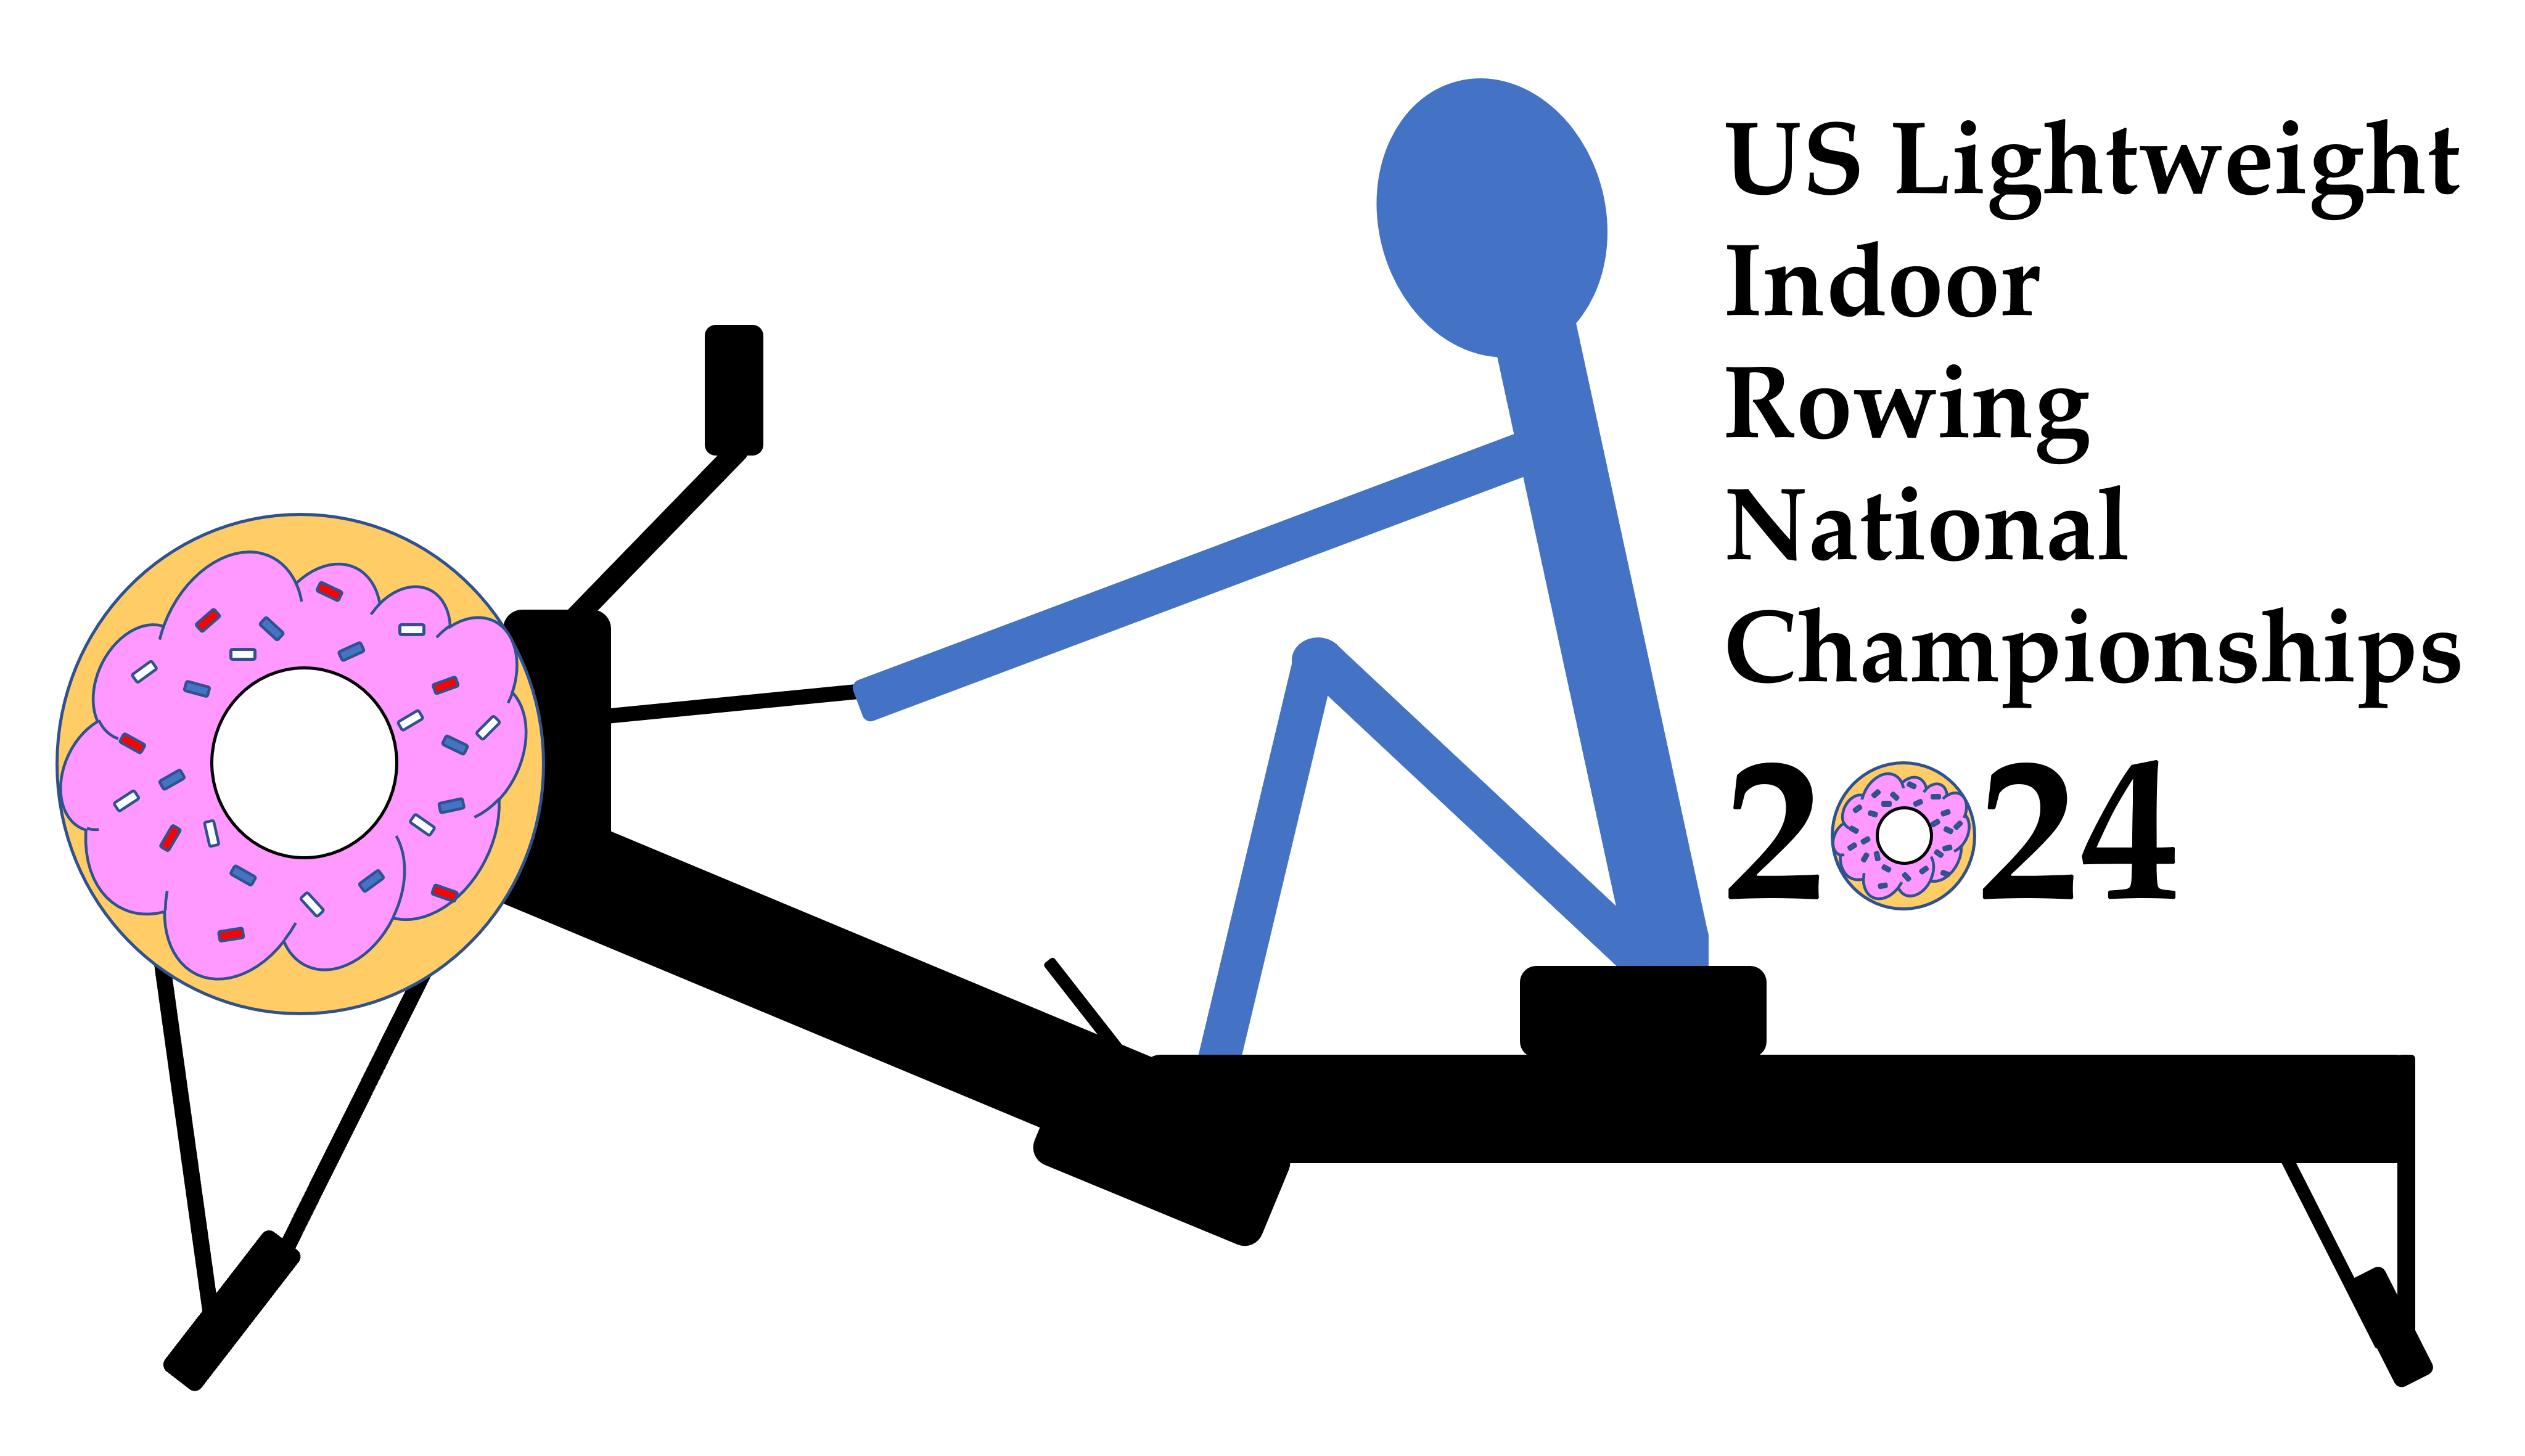 US Lightweight Indoor Rowing National Championships